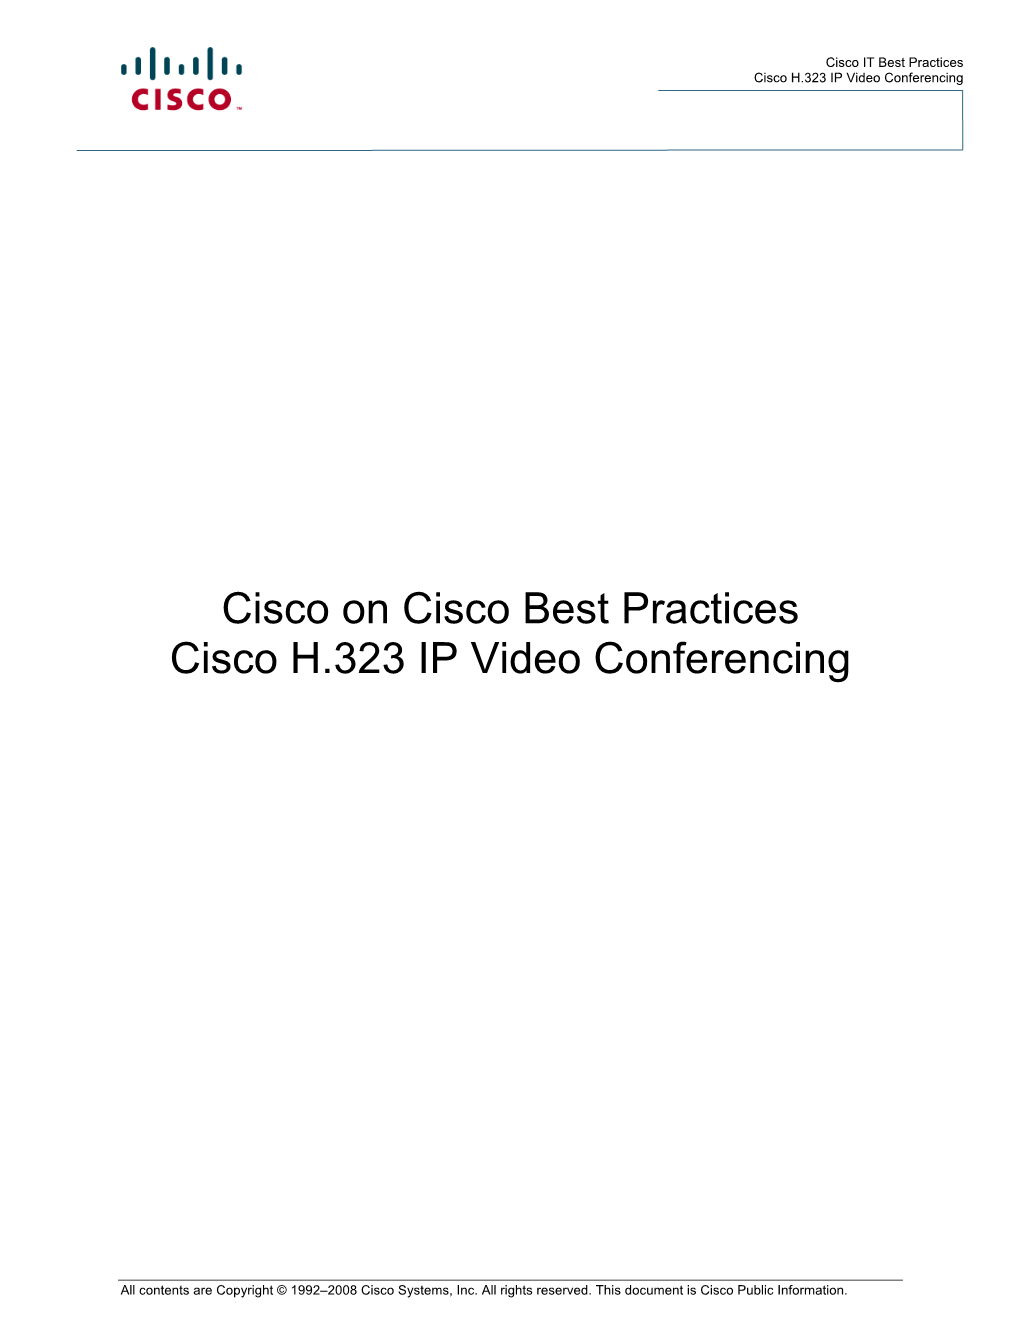 Cisco on Cisco Best Practices Cisco H.323 IP Video Conferencing